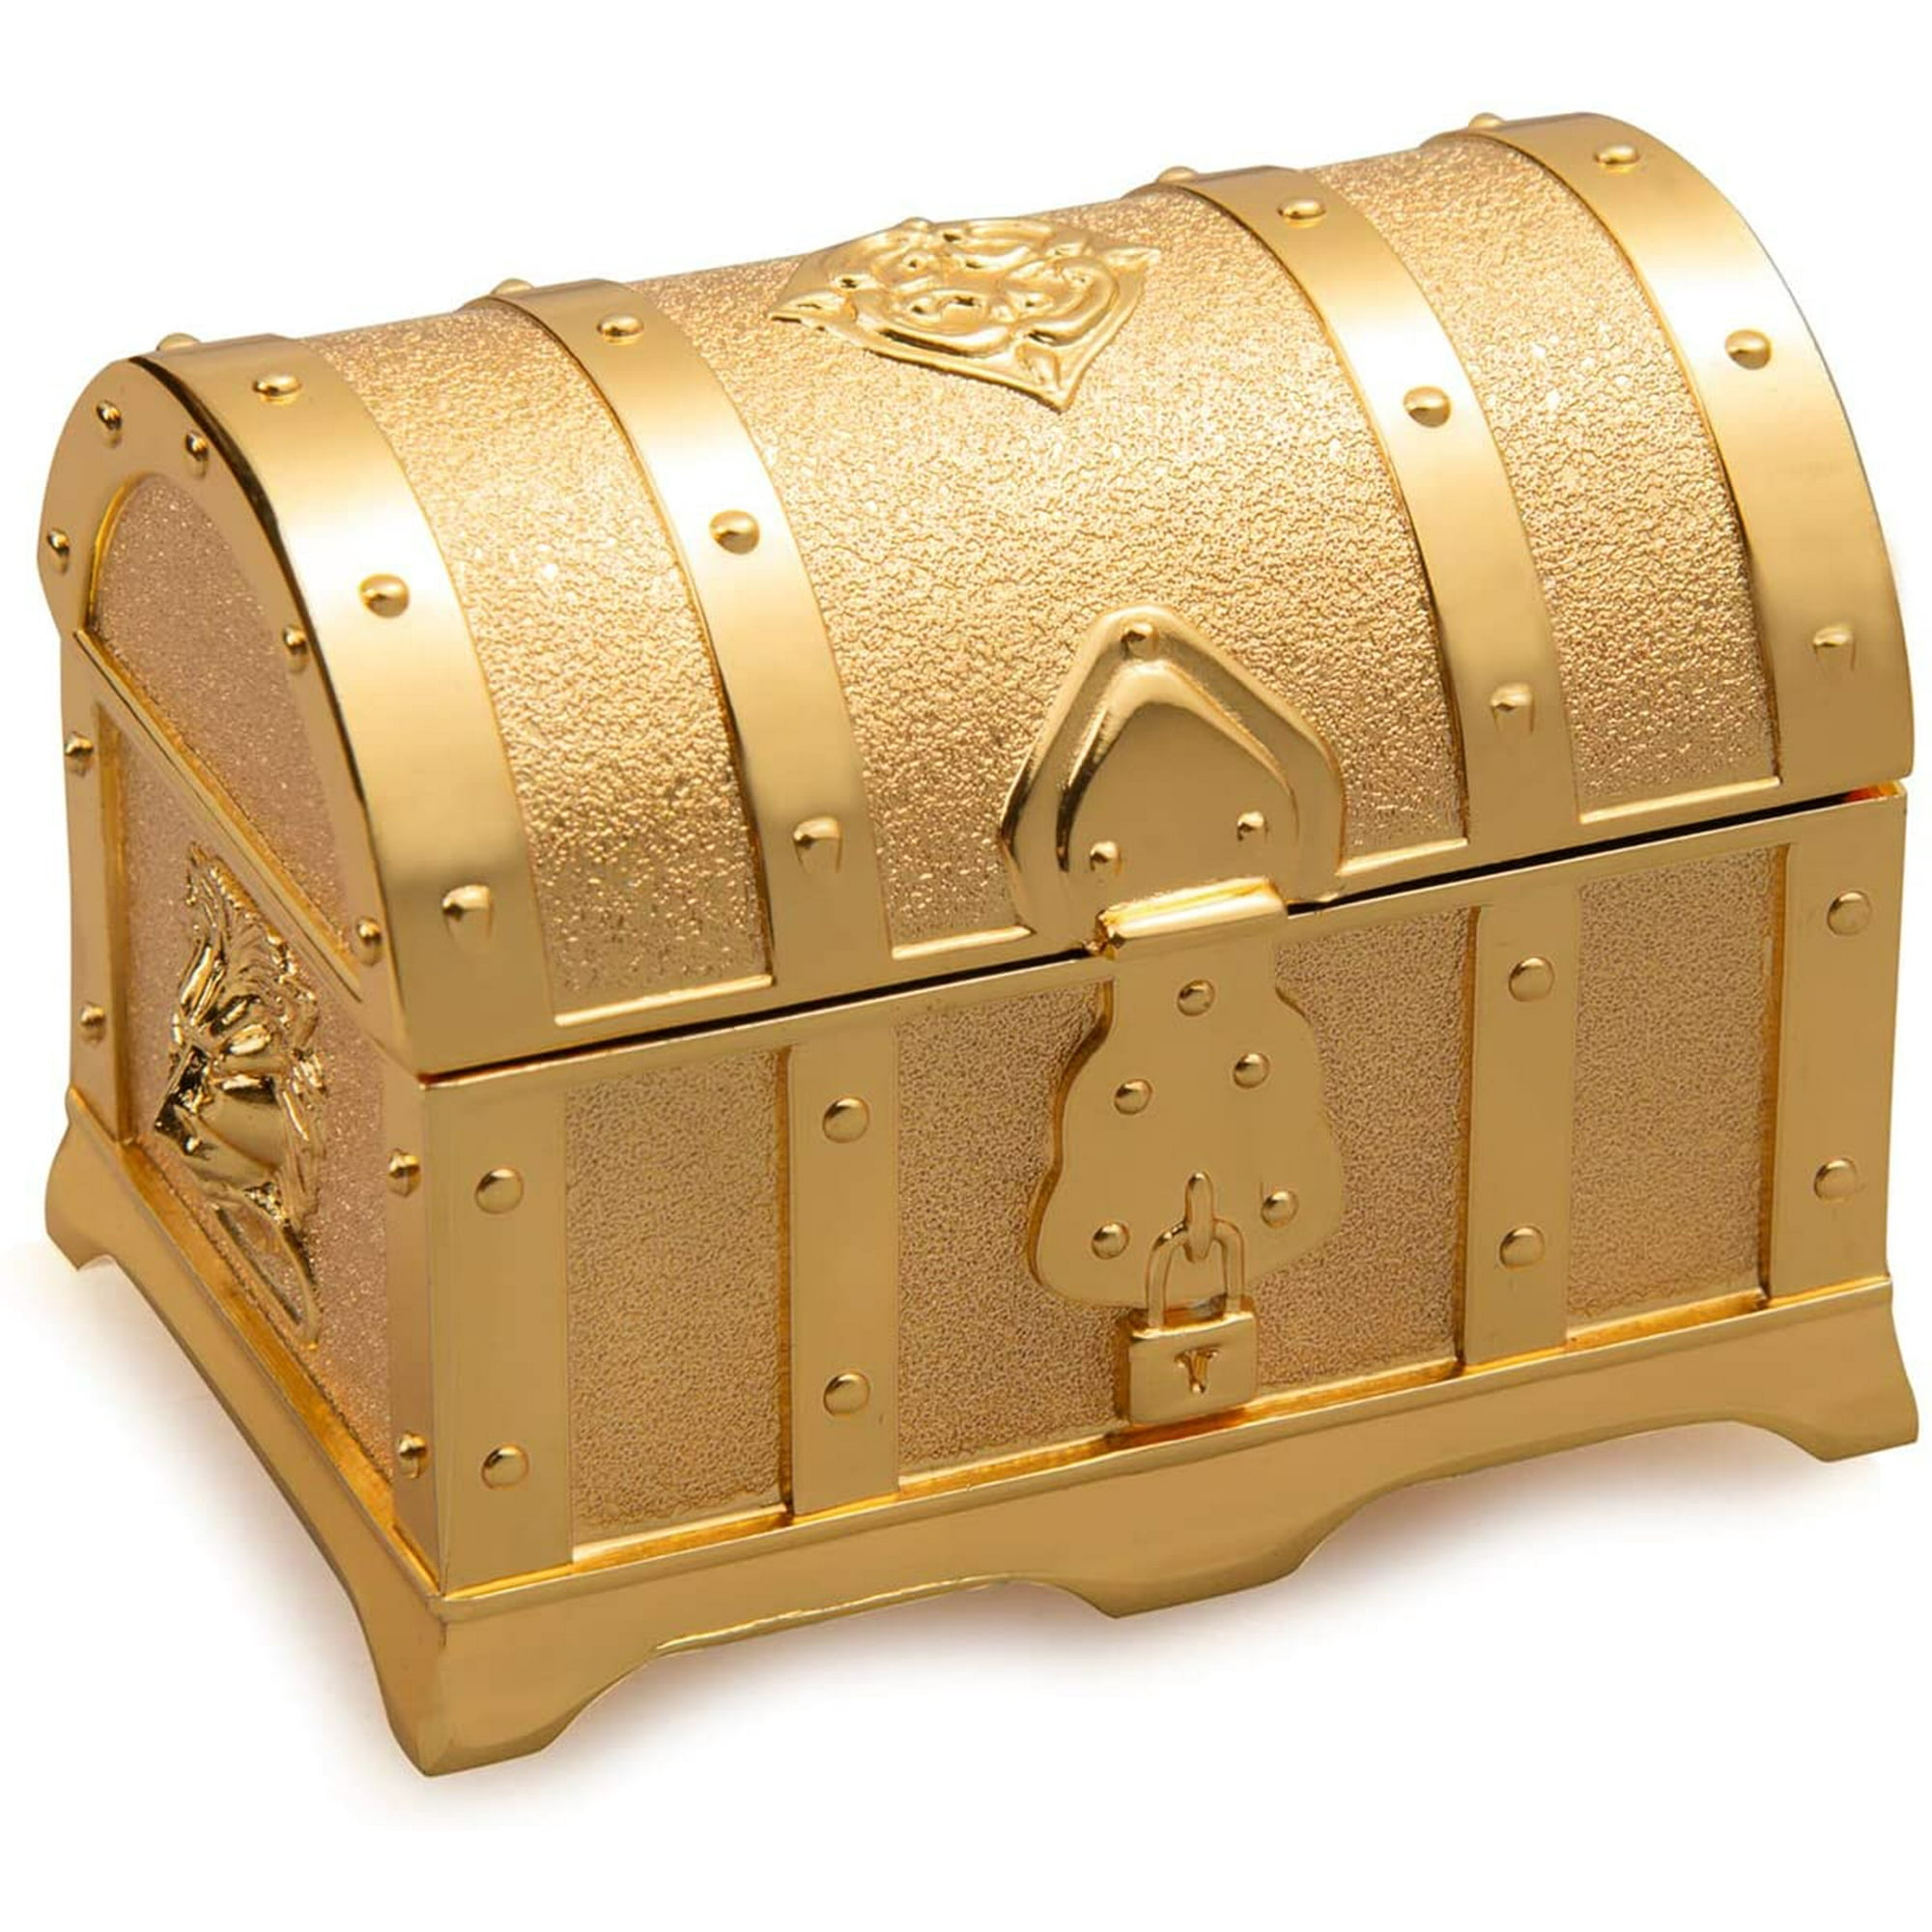 Golden chest